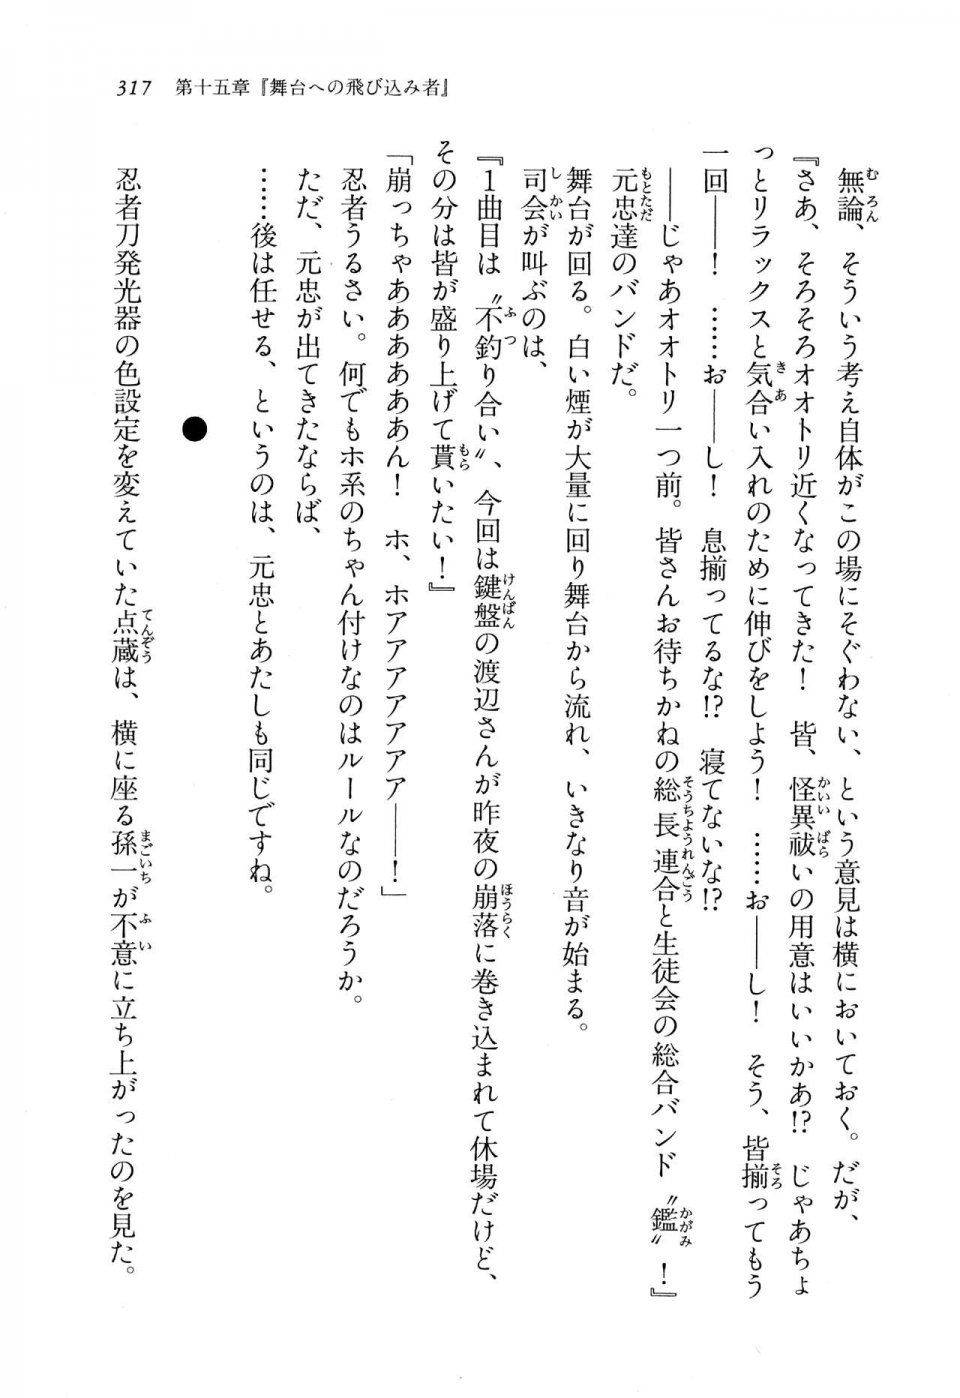 Kyoukai Senjou no Horizon BD Special Mininovel Vol 8(4B) - Photo #321